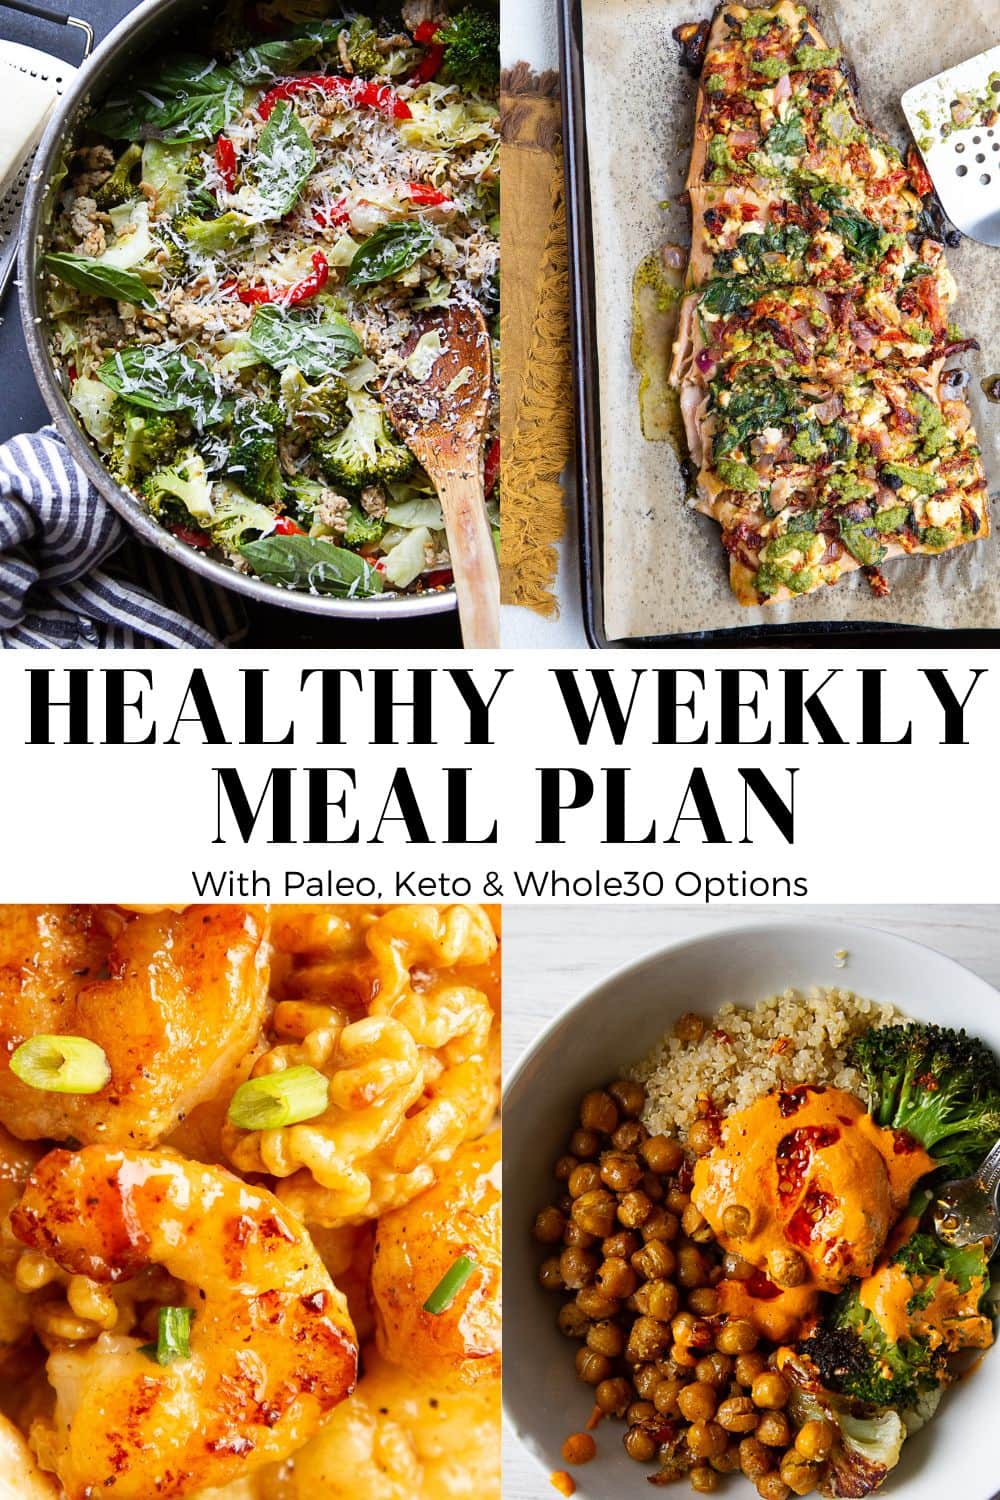 Healthy Meal Plan - Week 36 - The Roasted Root